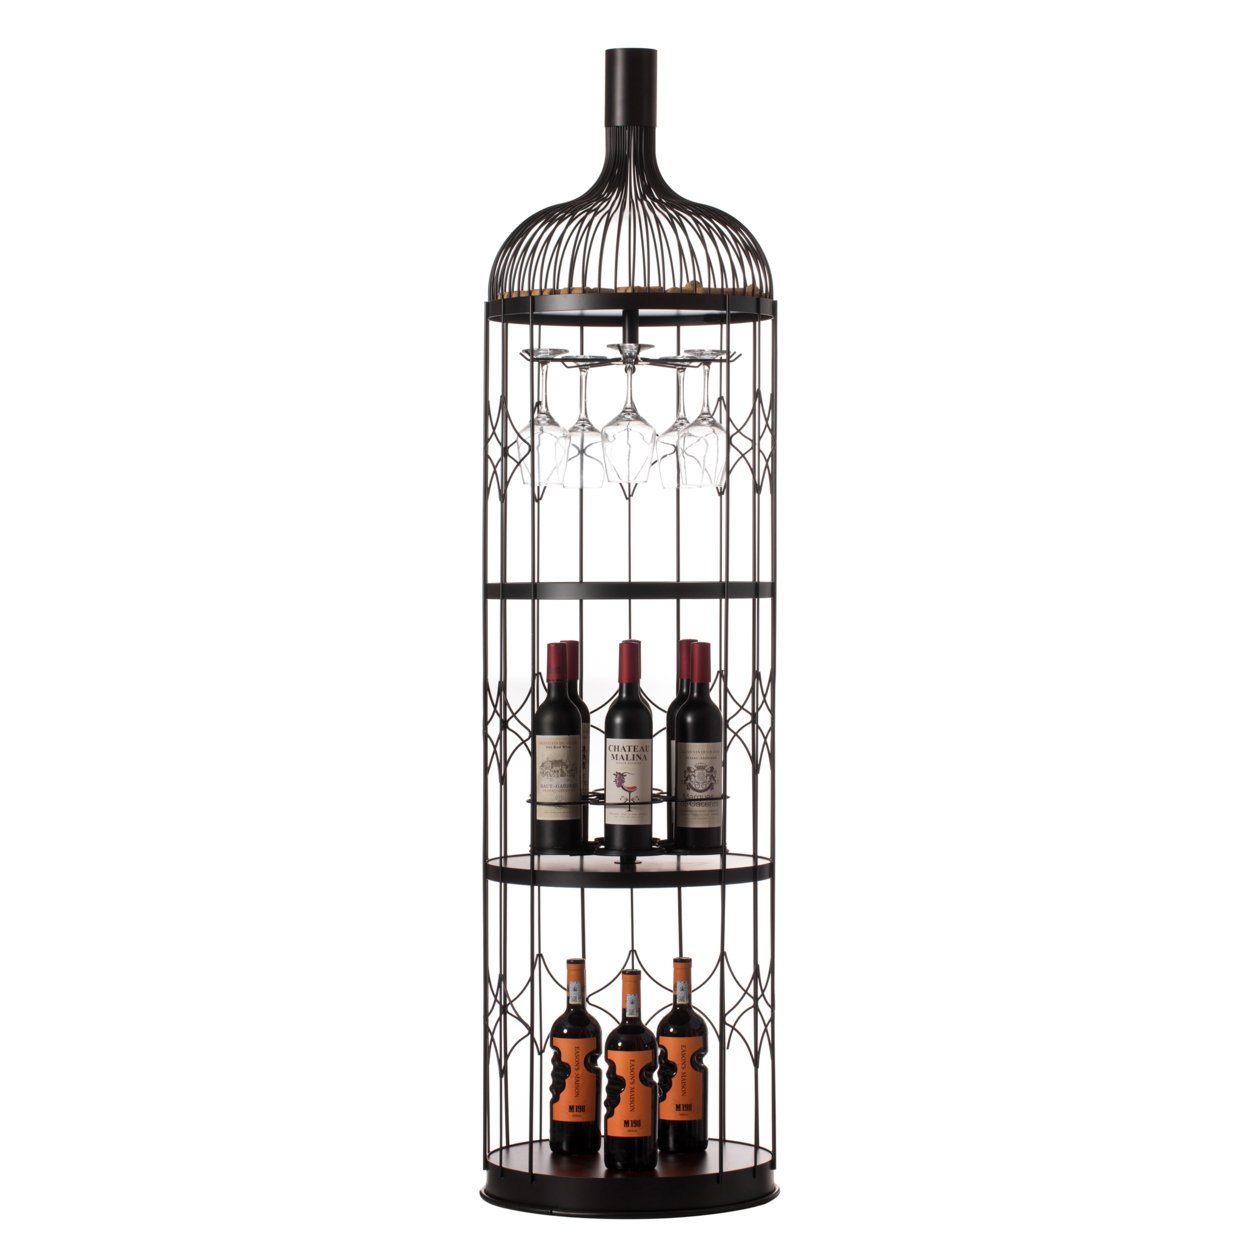 Creative Bottle Shaped Black Wine Holder Rack Holder For Dining Room, Office, And Entryway